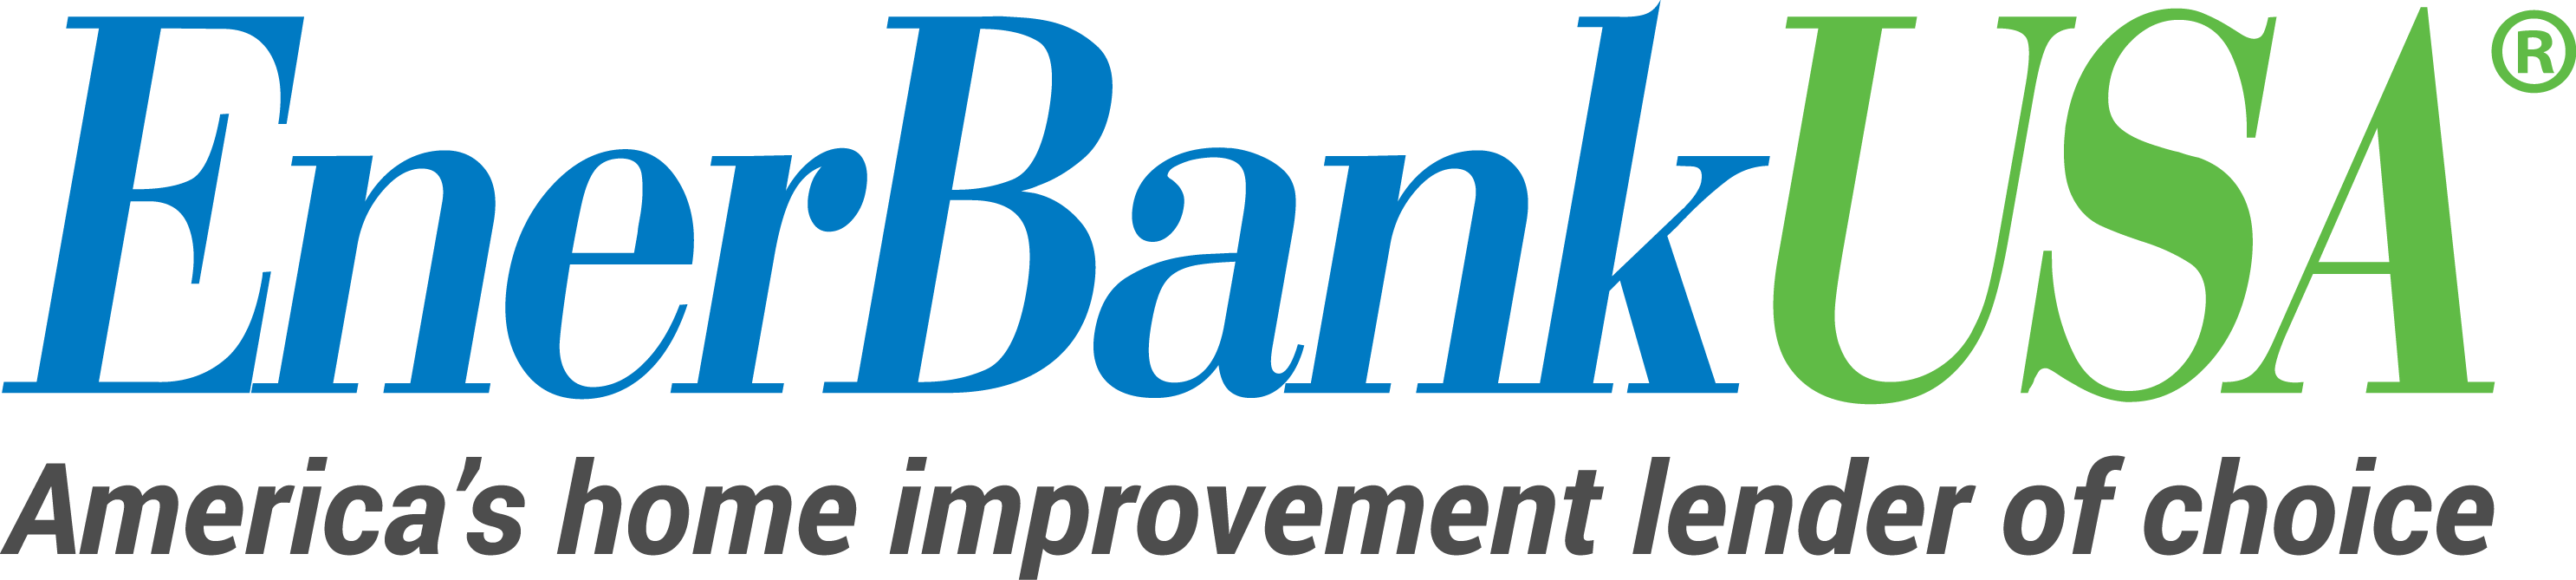 EnerBank USA - America's home improvement lender of choice